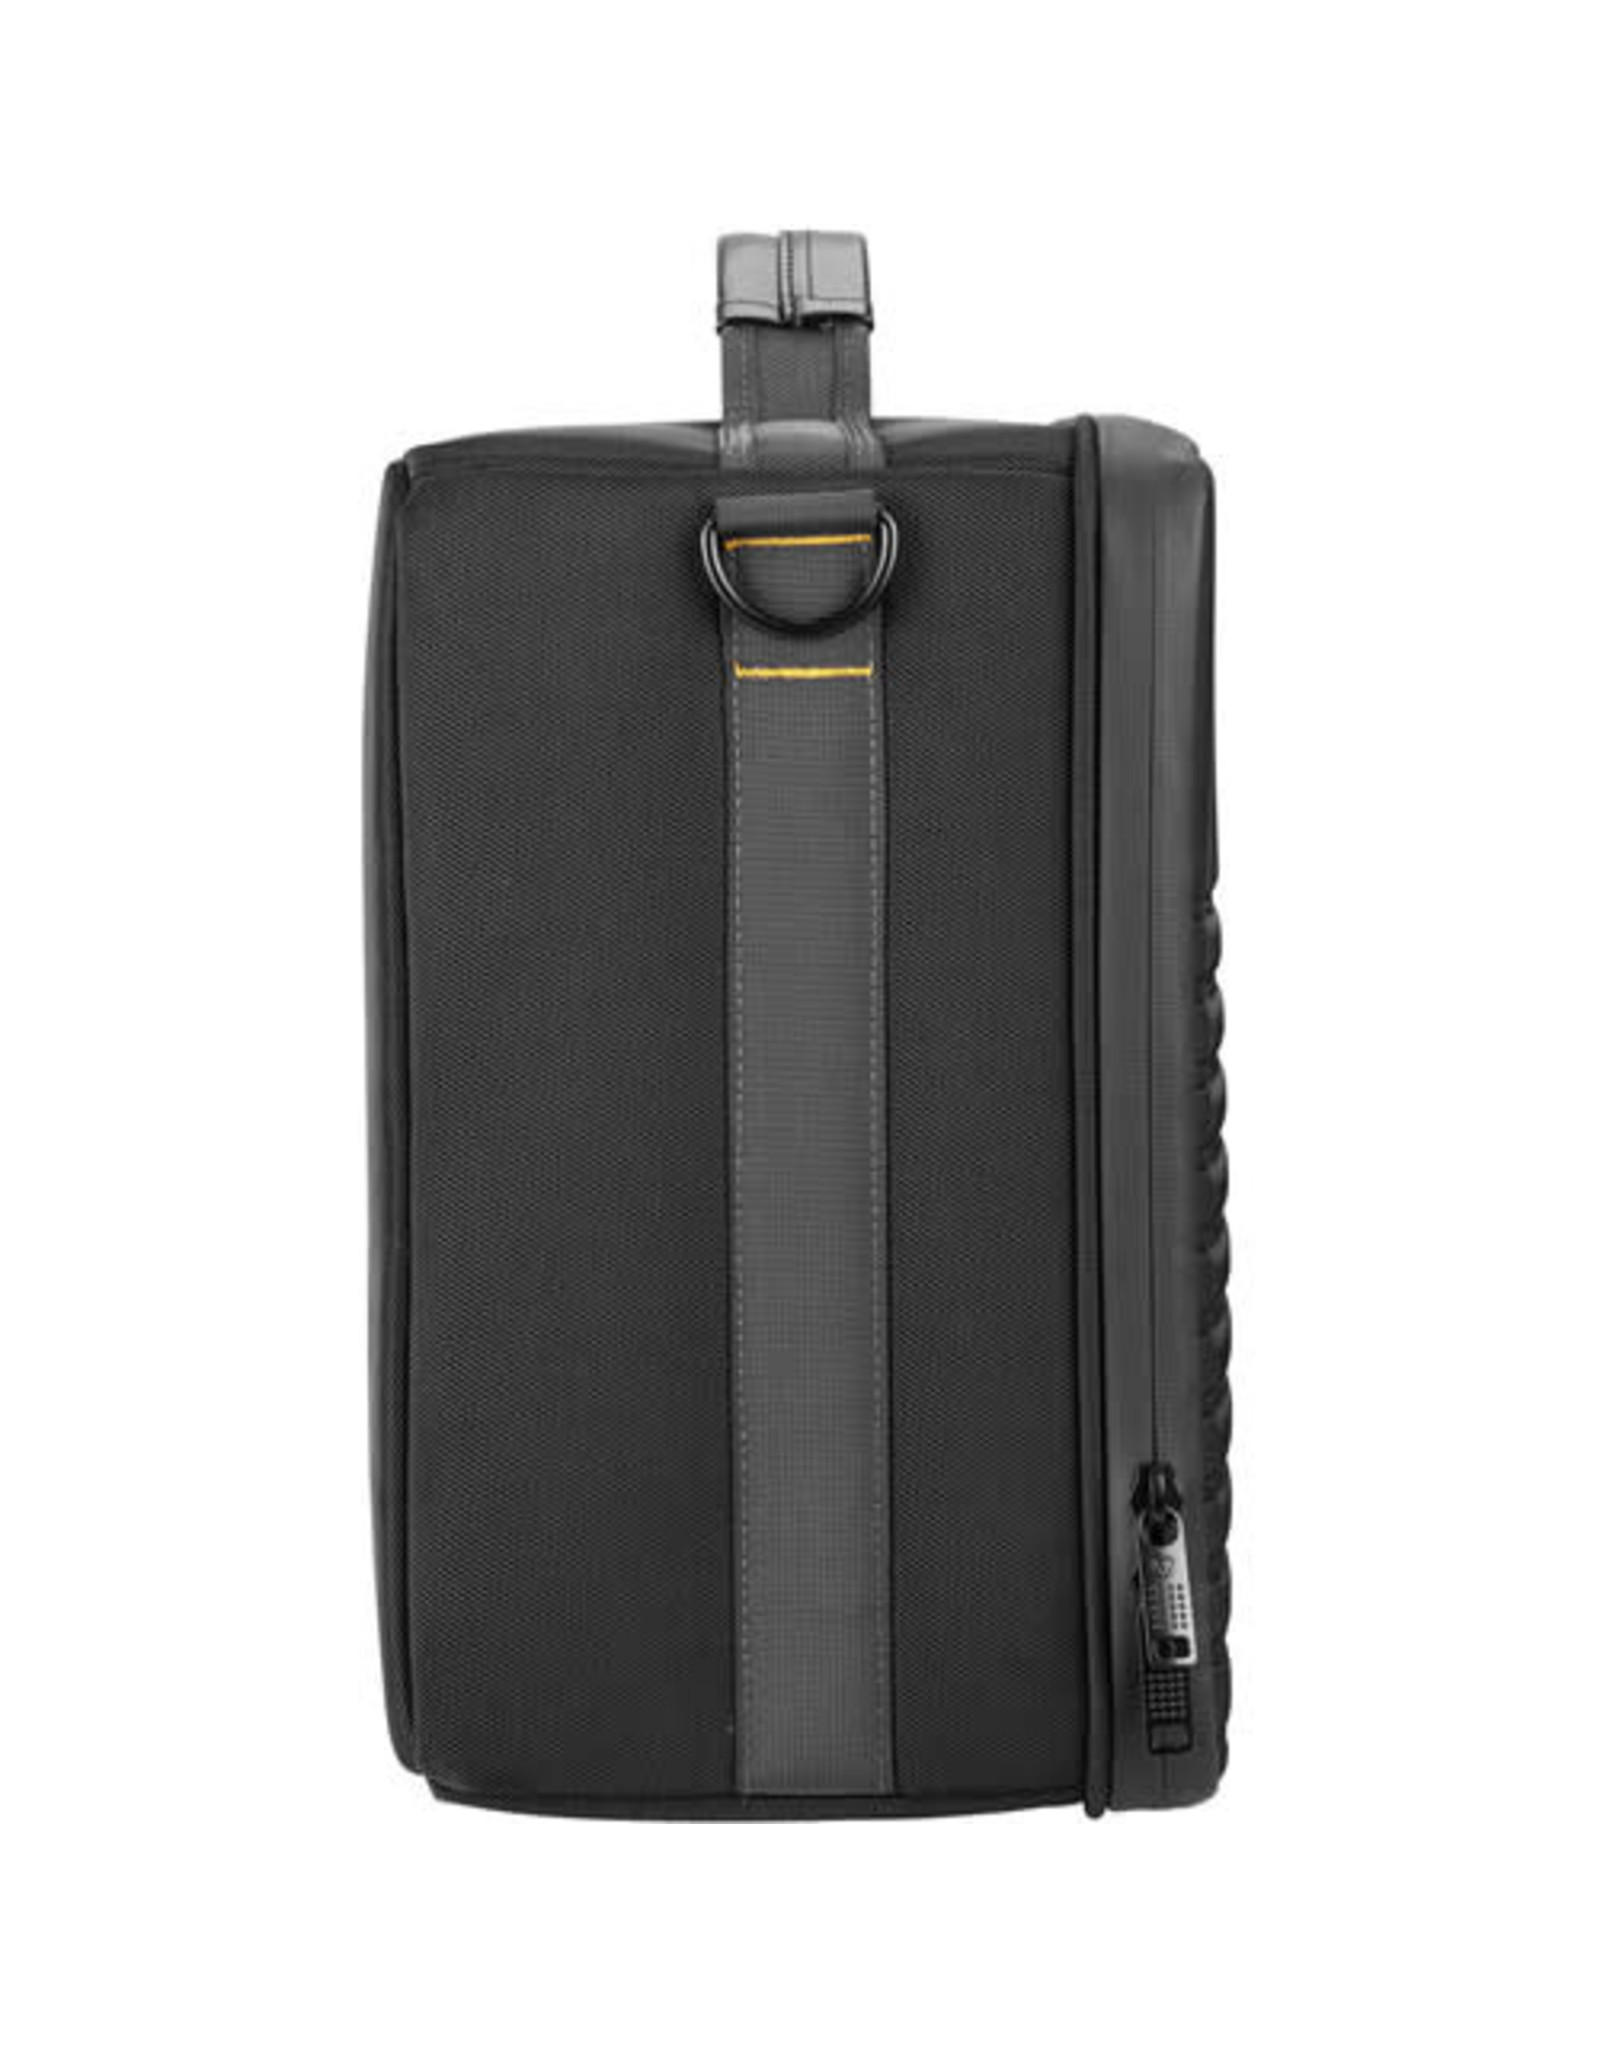 Vanguard Vanguard VEO BIB S46 Bag-in-Bag System Camera Case